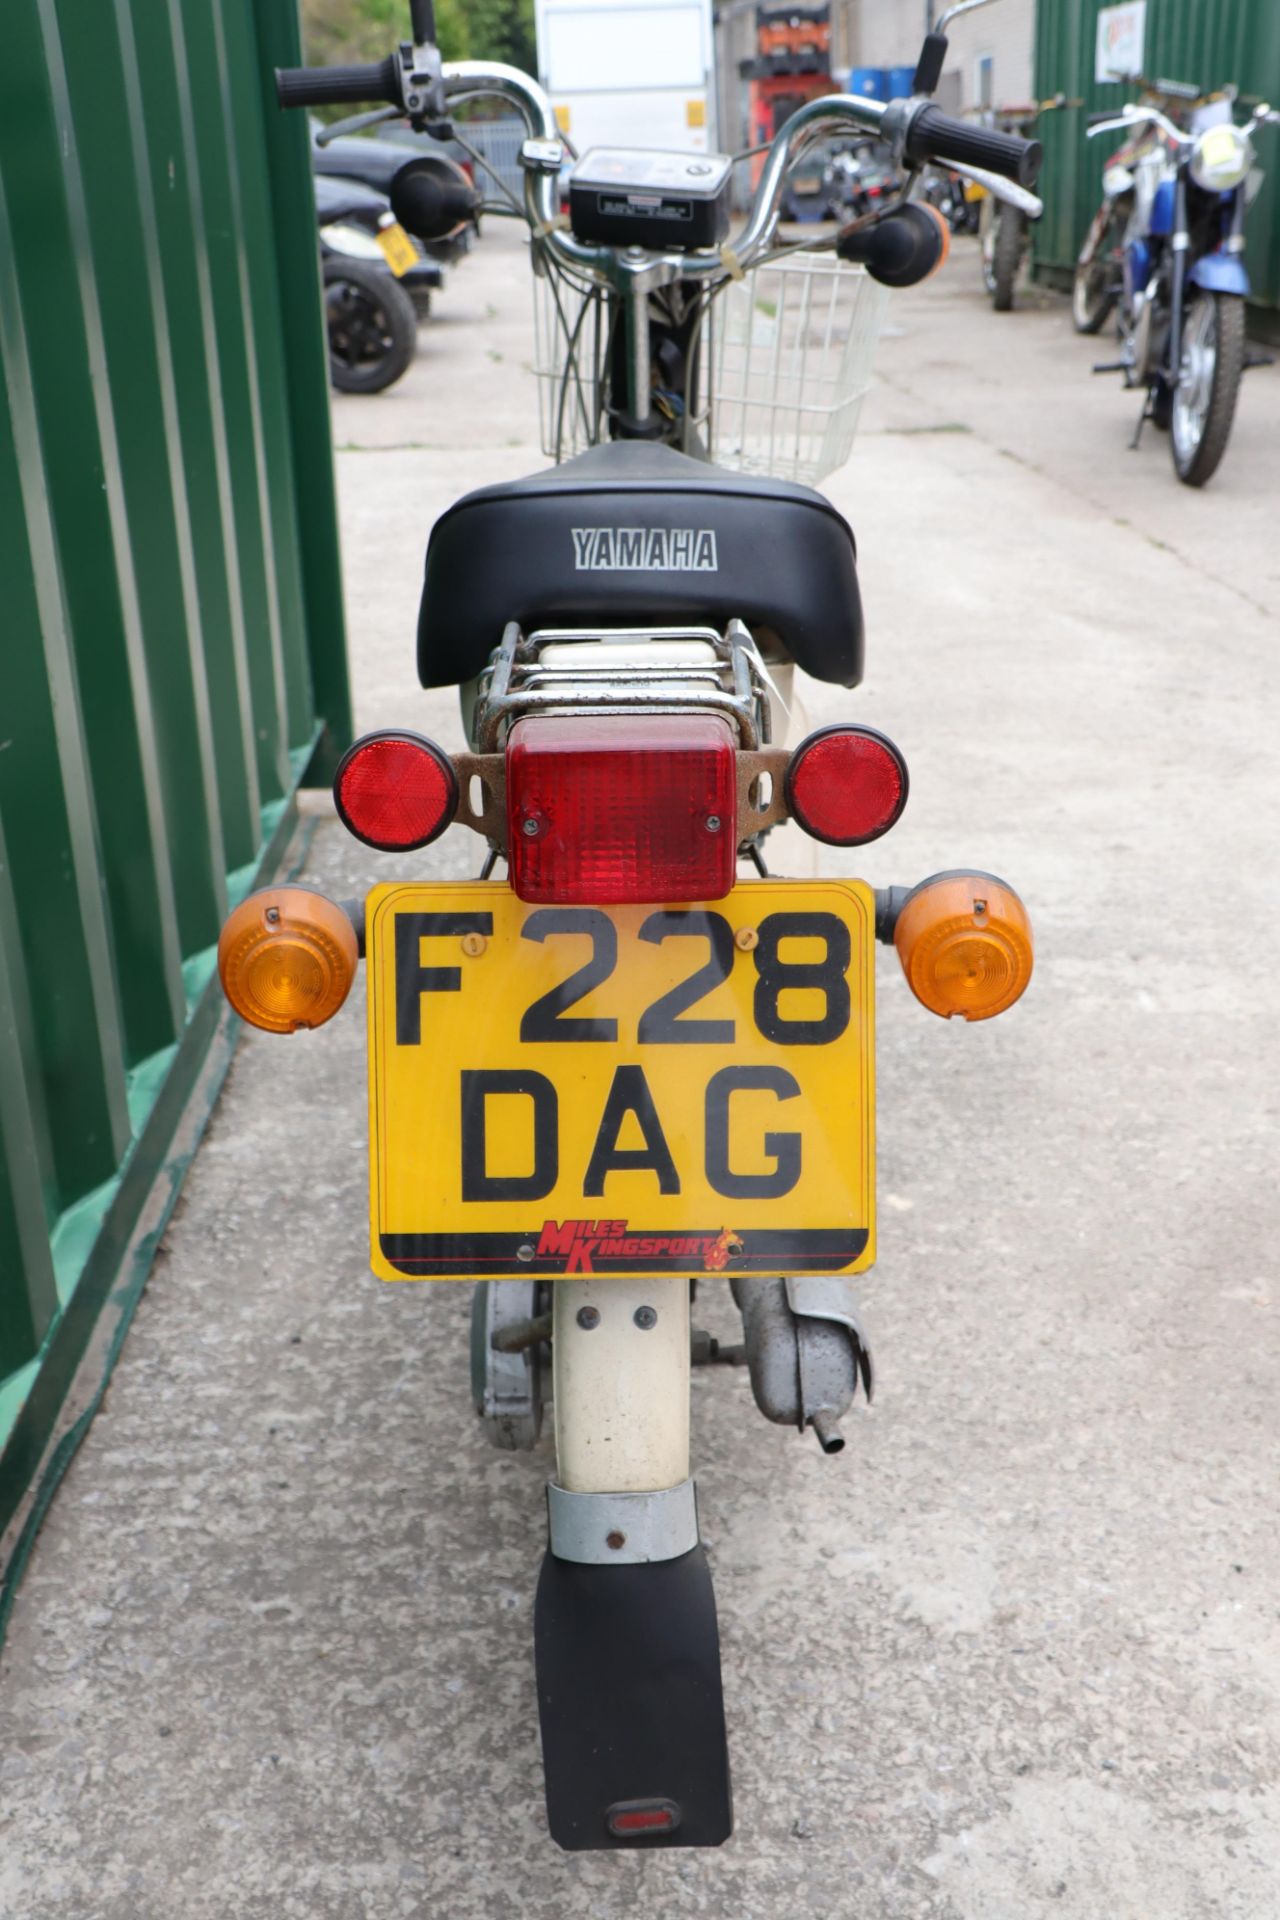 Yamaha QT50 Moped - Image 3 of 3